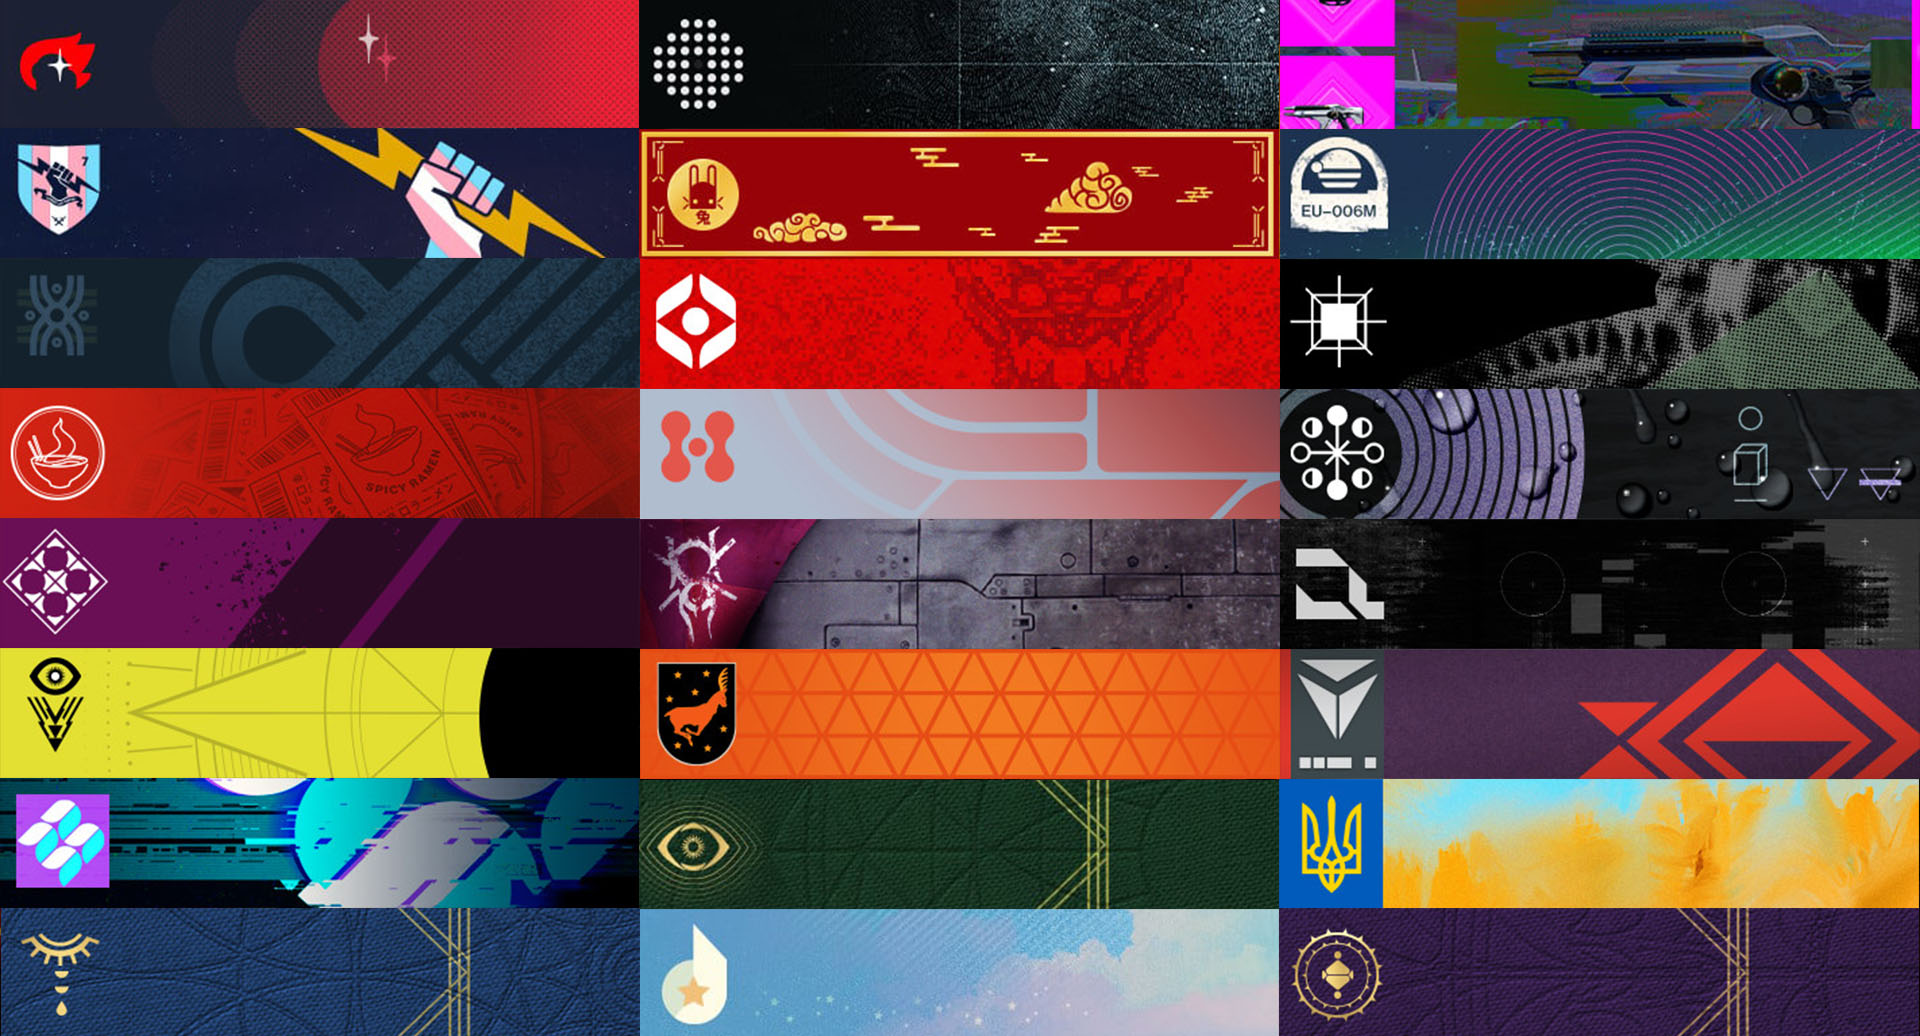 Destiny 2 All 30 Free Emblem Codes January 2024